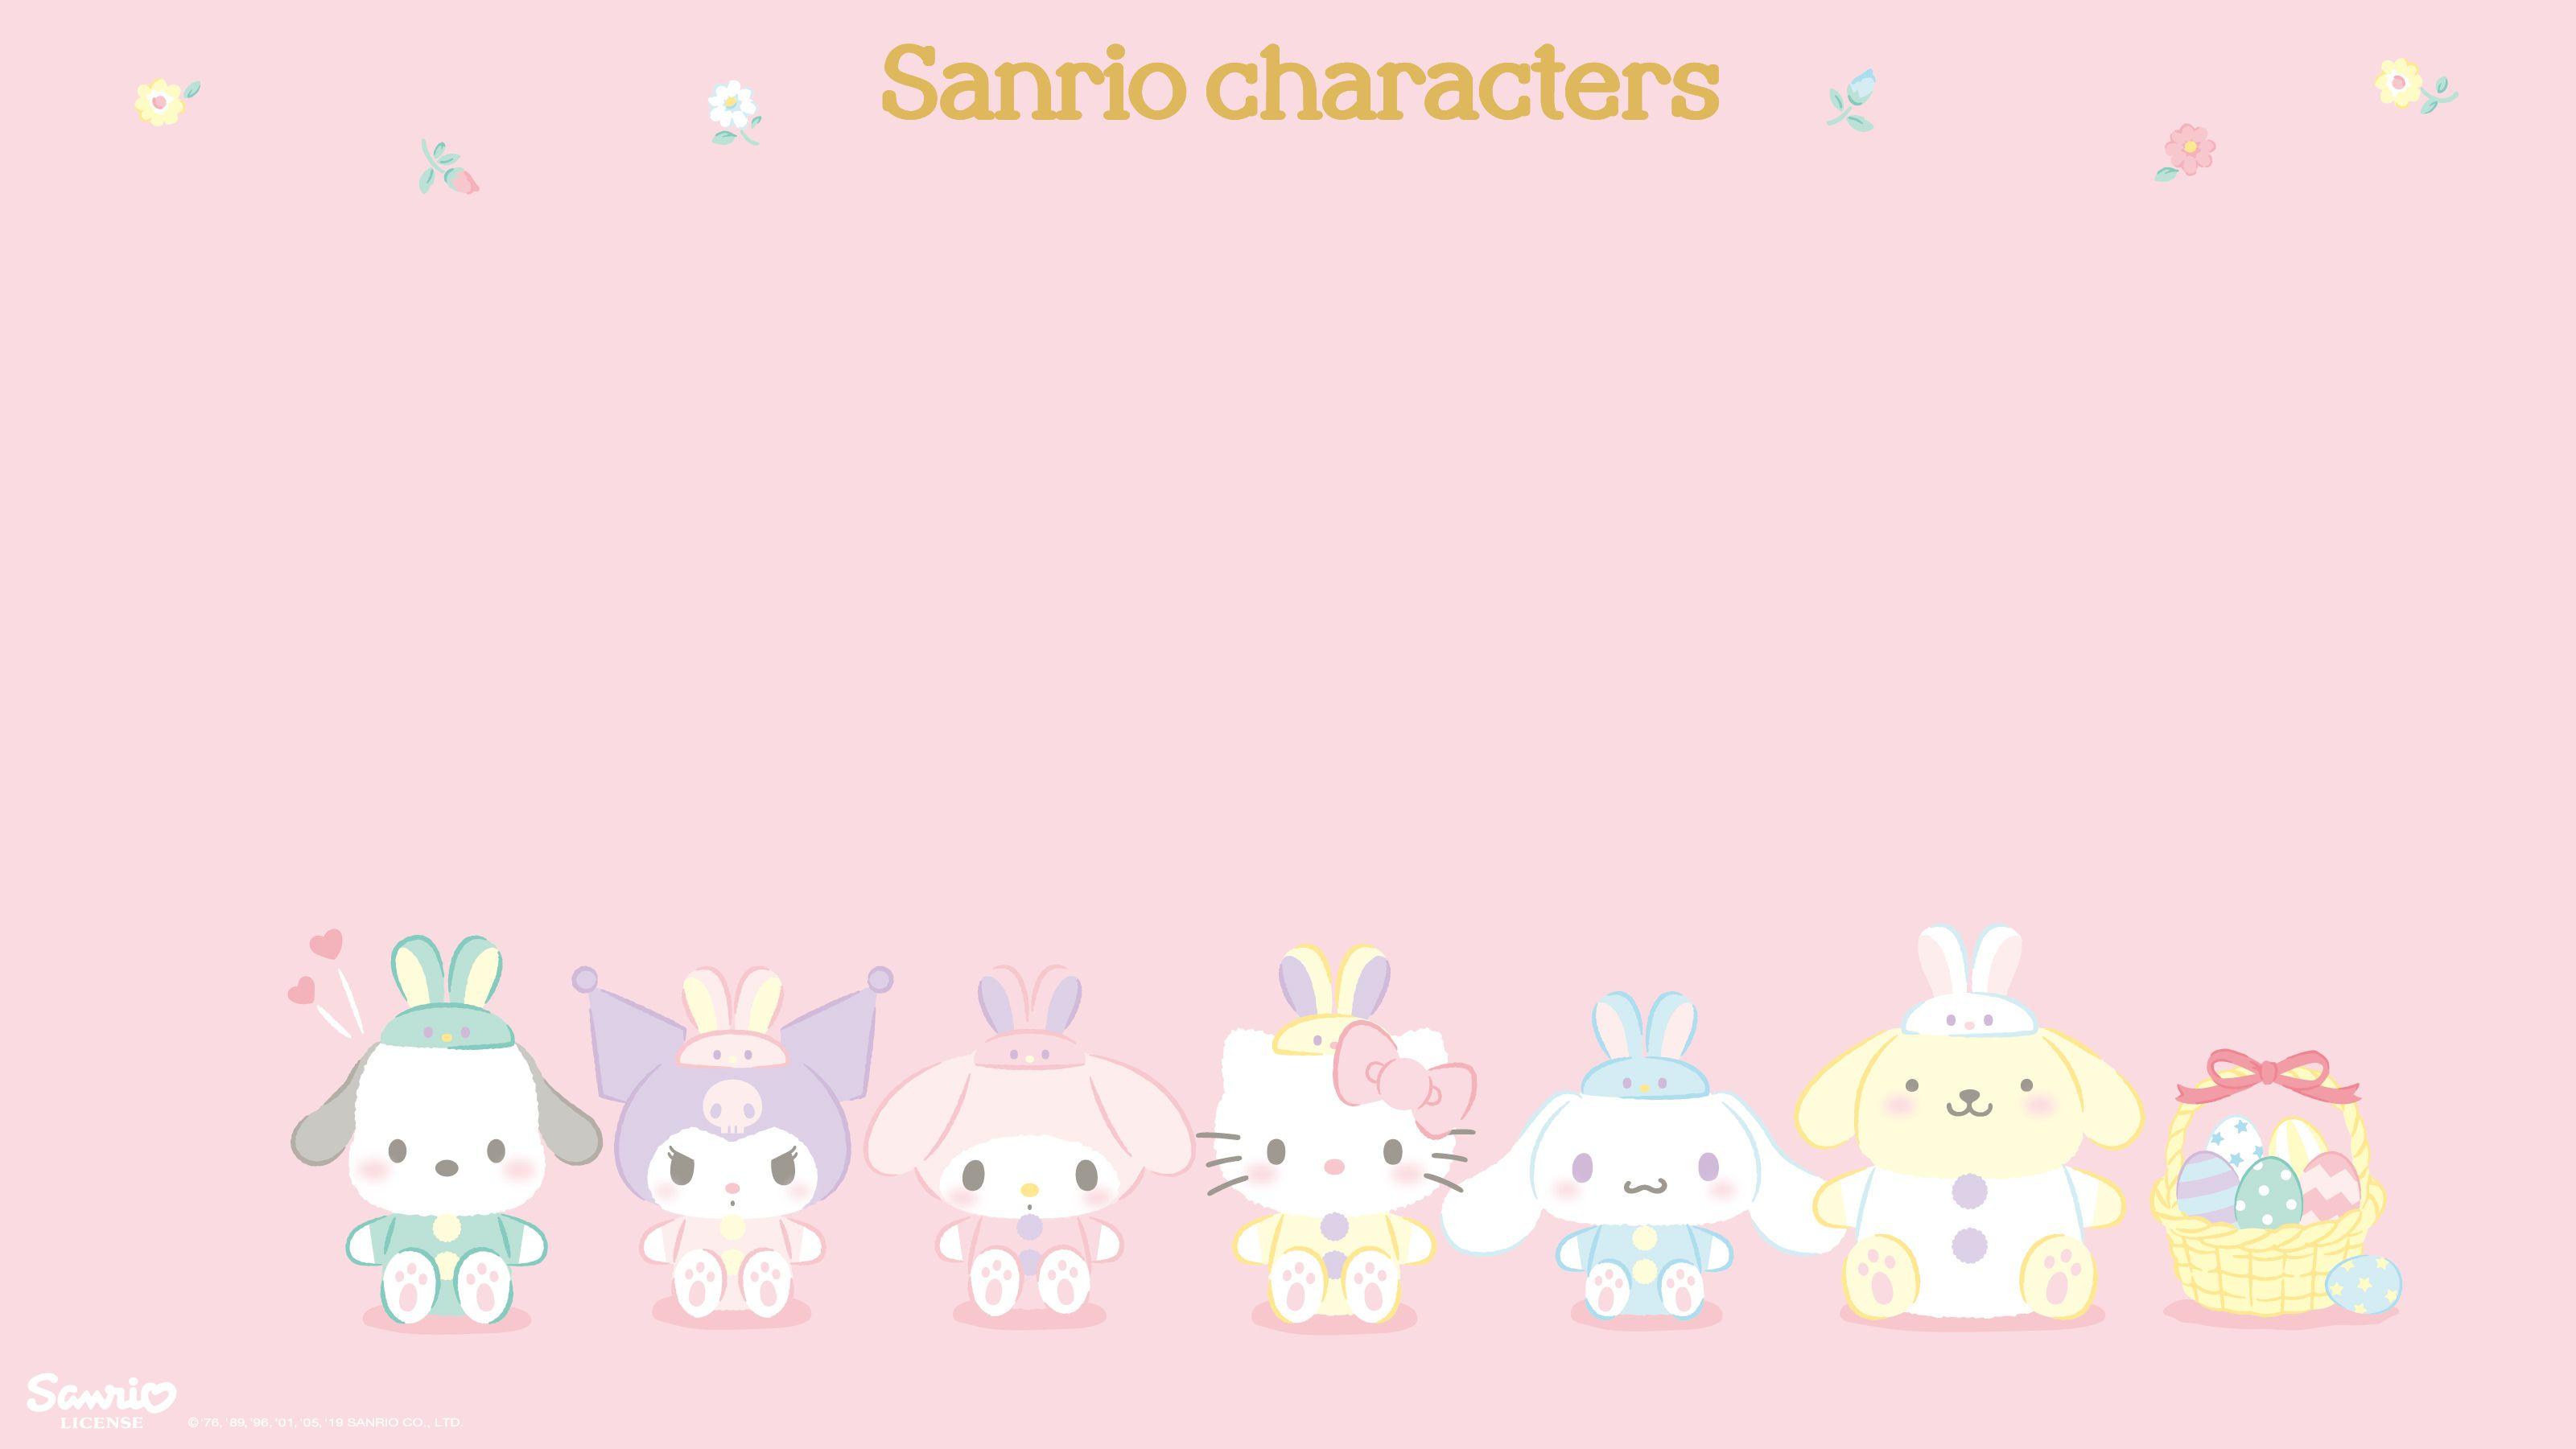 Sanrio Characters Kitty Dessert Theme Pin Badge 6 pcs Set Authentic 100%